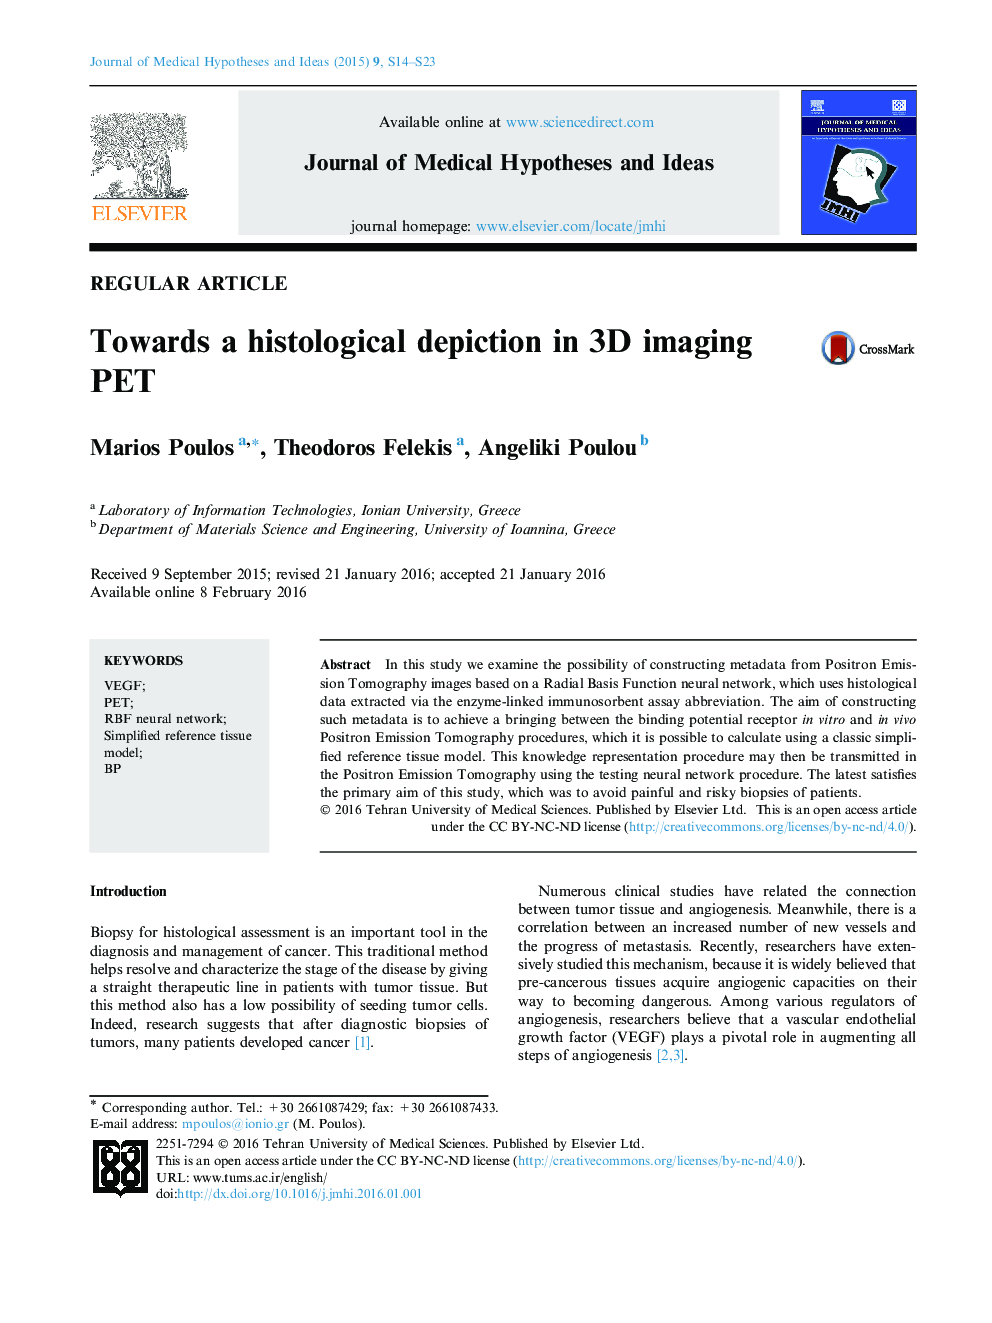 Towards a histological depiction in 3D imaging PET